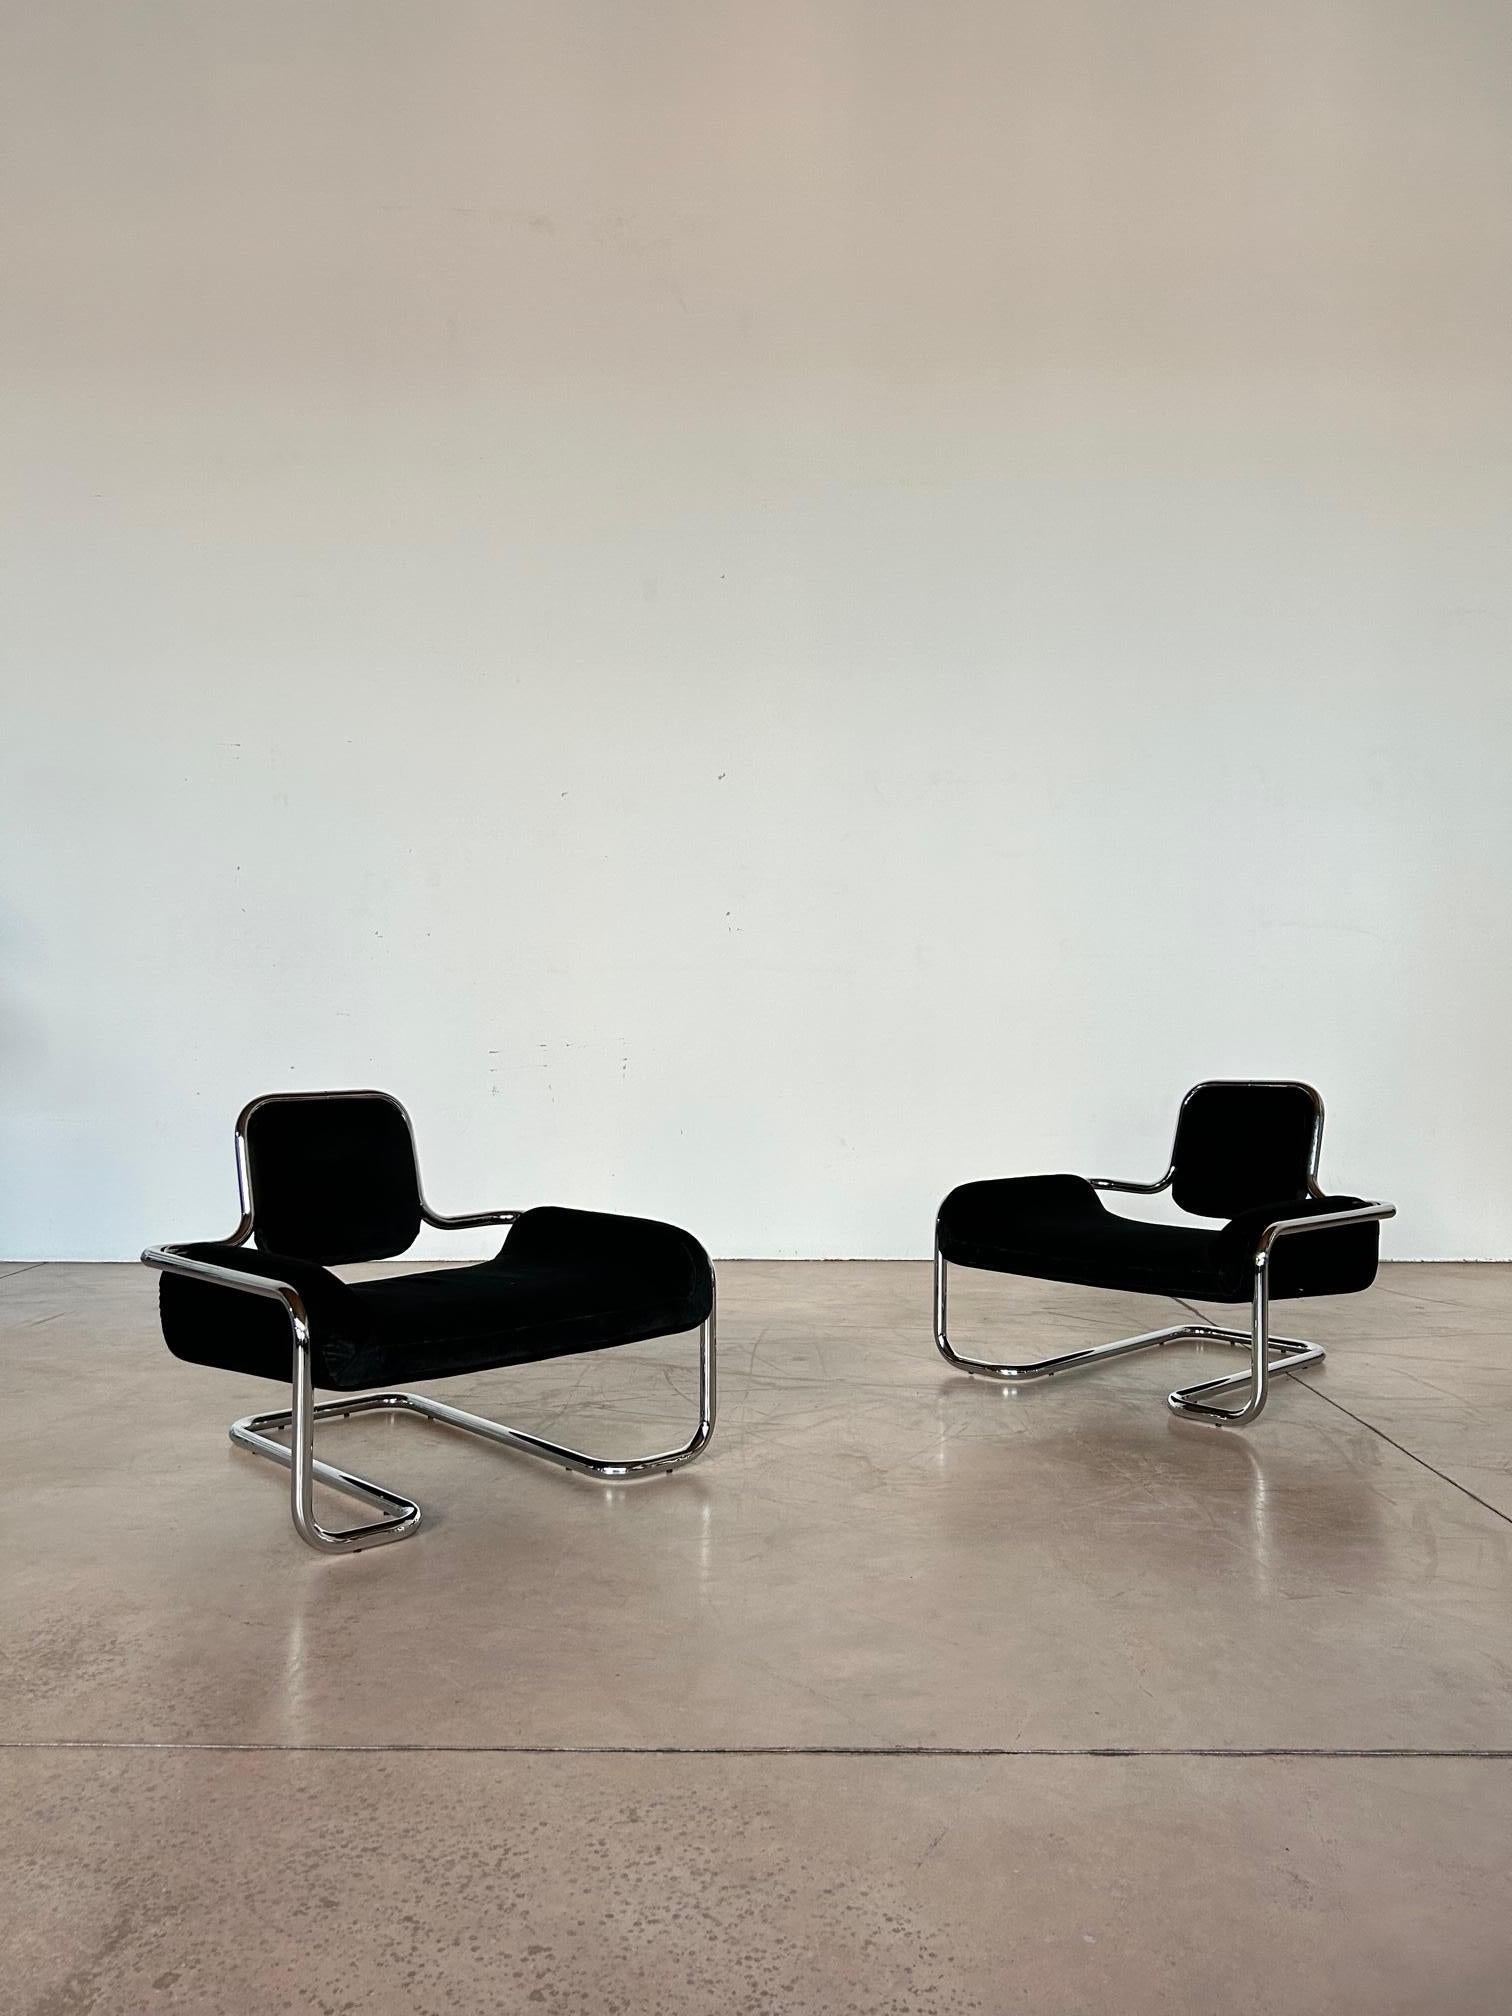 Set of a pair oif Kwok Hoi Chan Limande chairs black linen velvet ed. Steiner, France, 1970s.
Chromed steel tube frame, plastic feet, absolute black linen velvet upholstery; perfect conditons. 
Kwok Hoi Chan (1939 – 1987) was a Chinese architect